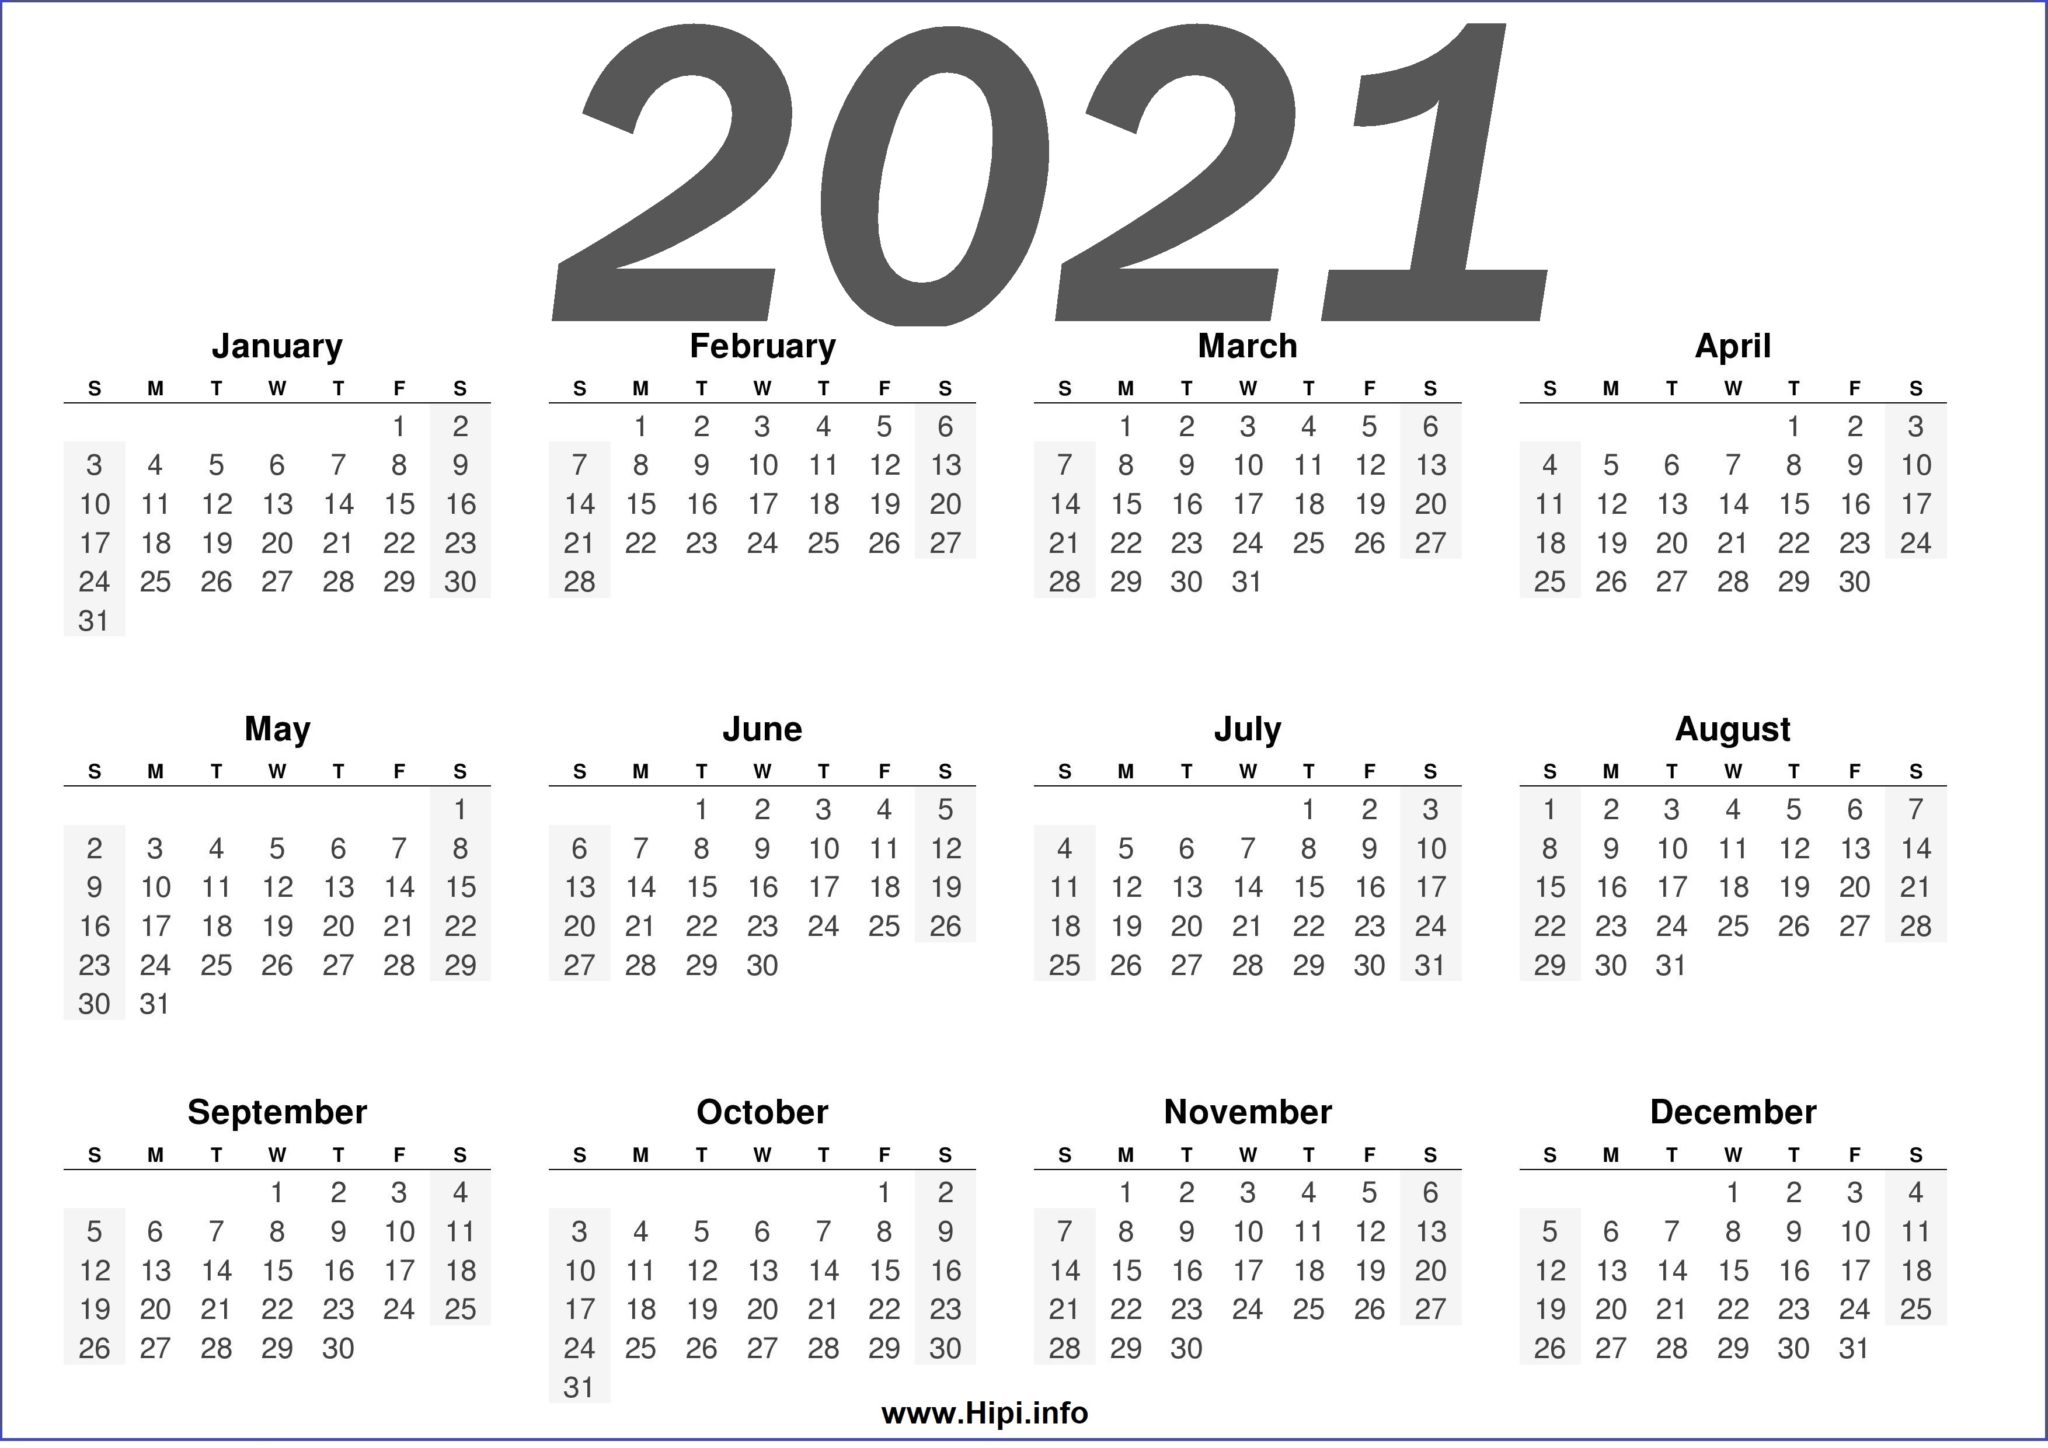 Free Printable 2021 Calendars Horizontal - Hipi.info | Calendars